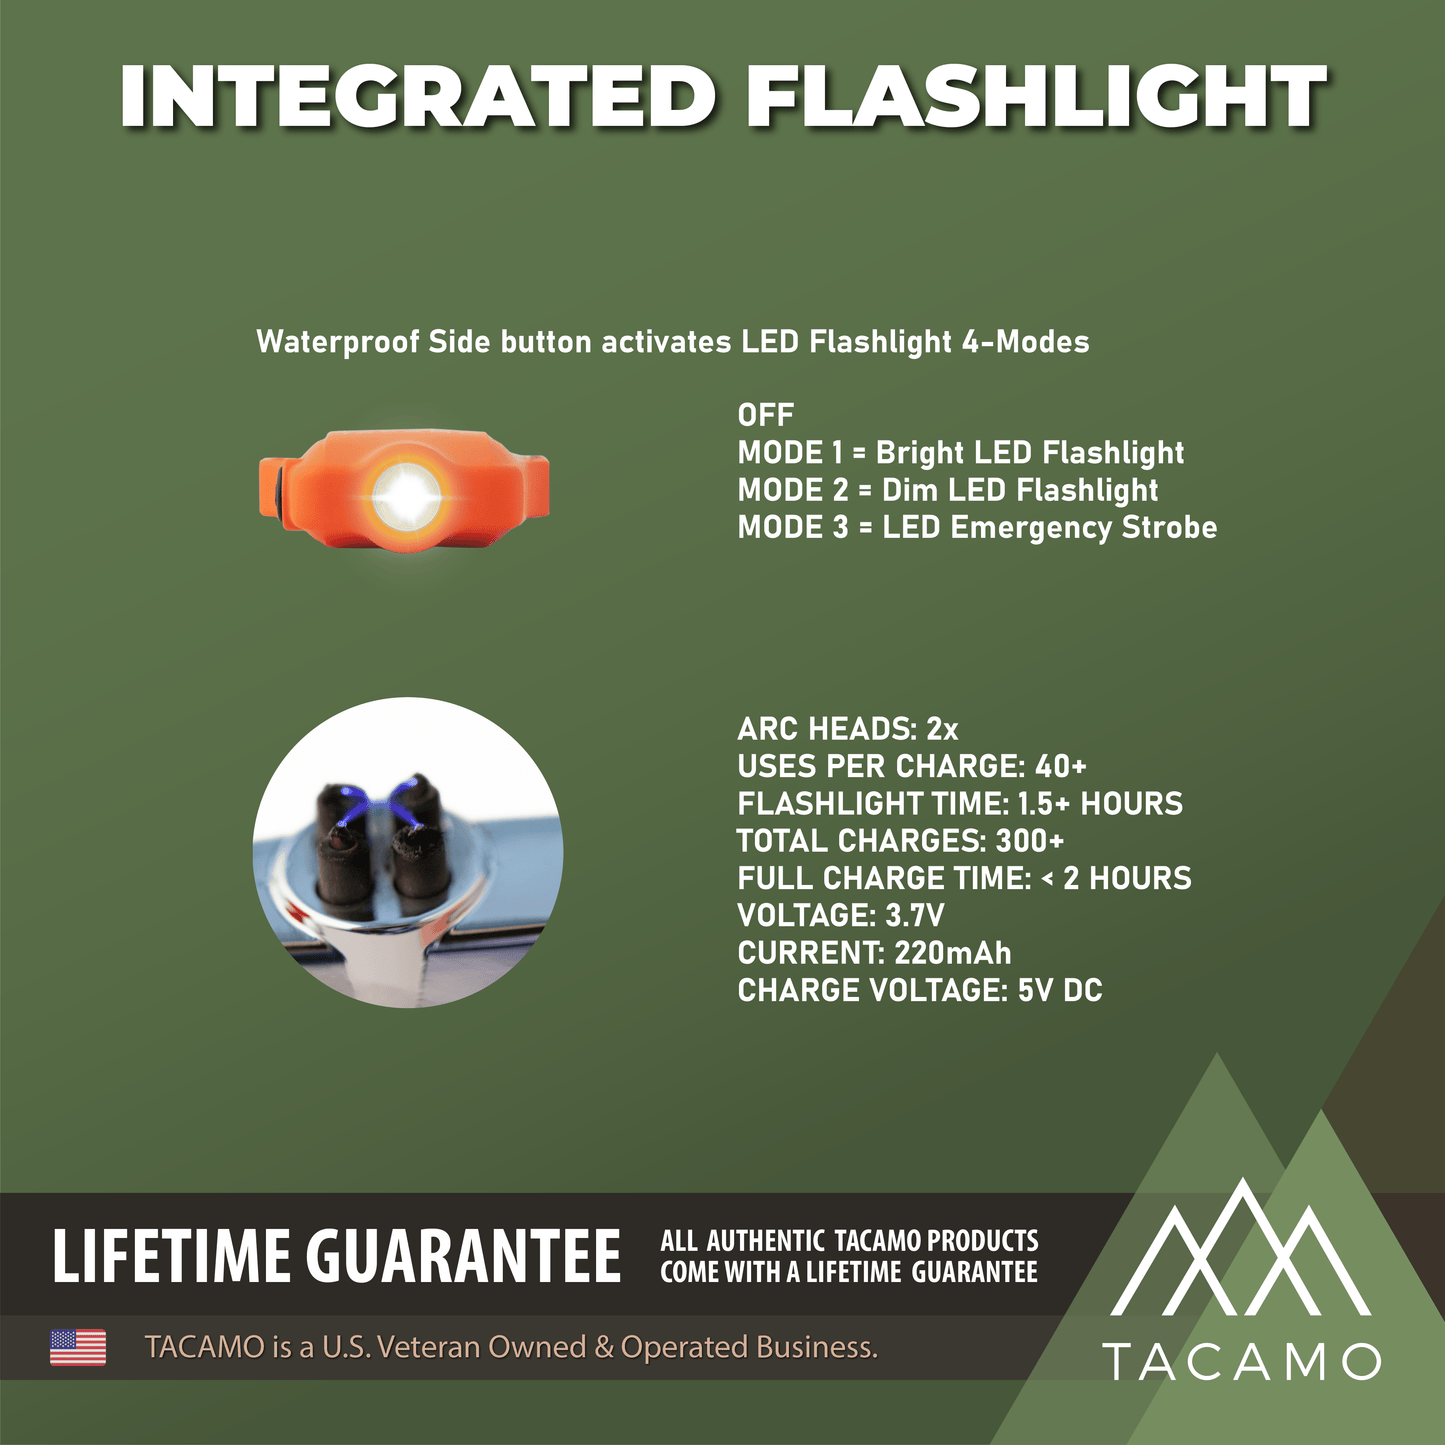 TACAMO H2 Lighter with integrated flashlight and Lifetime Guarantee signage